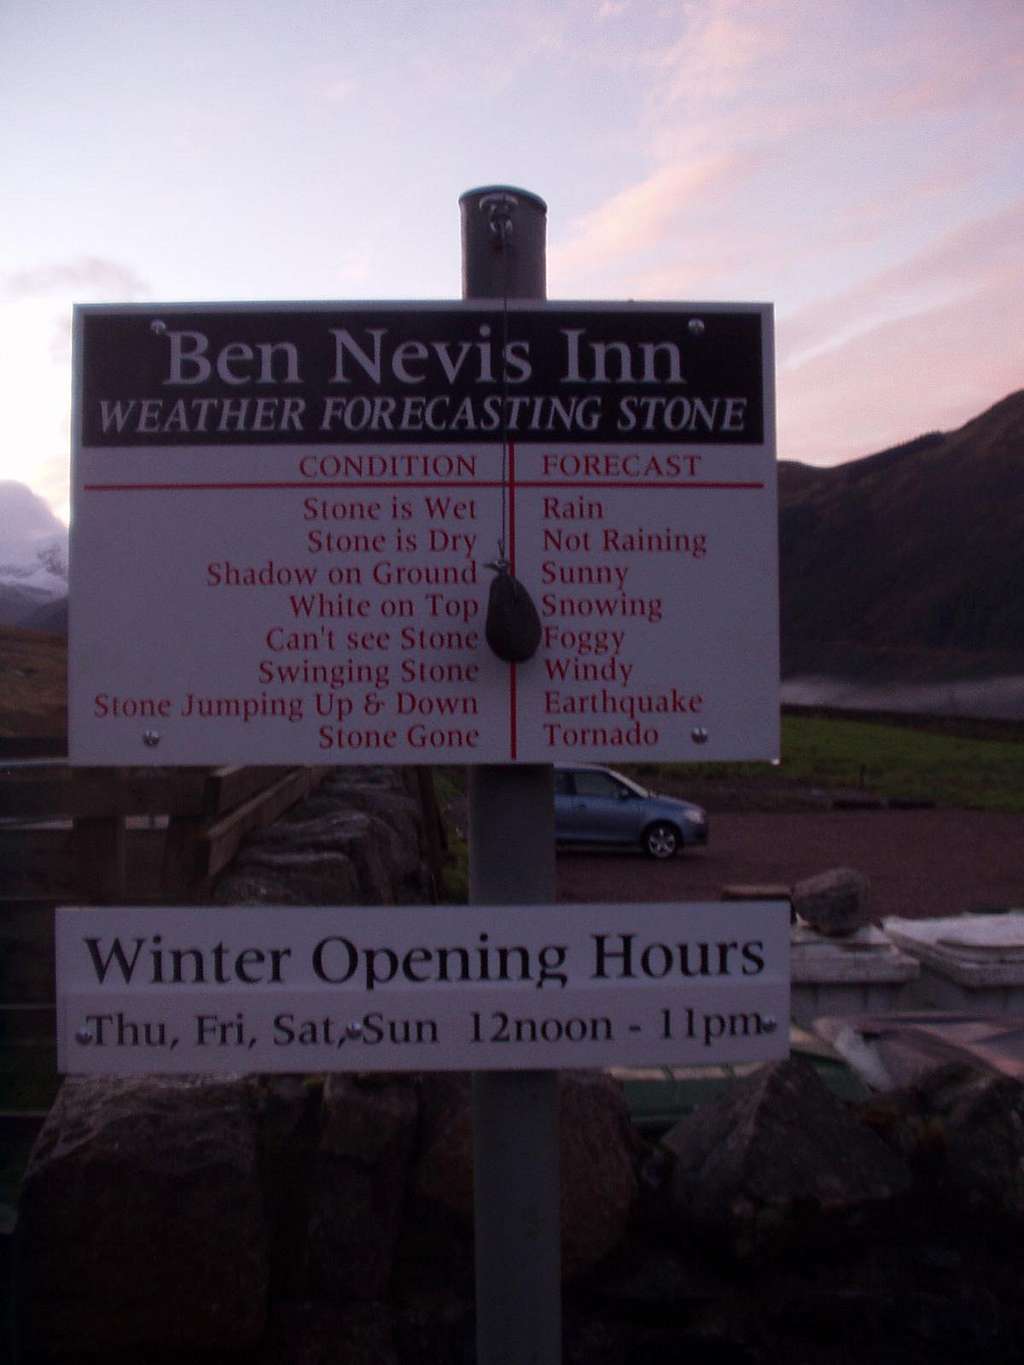 Ben Nevis Inn WX forecast